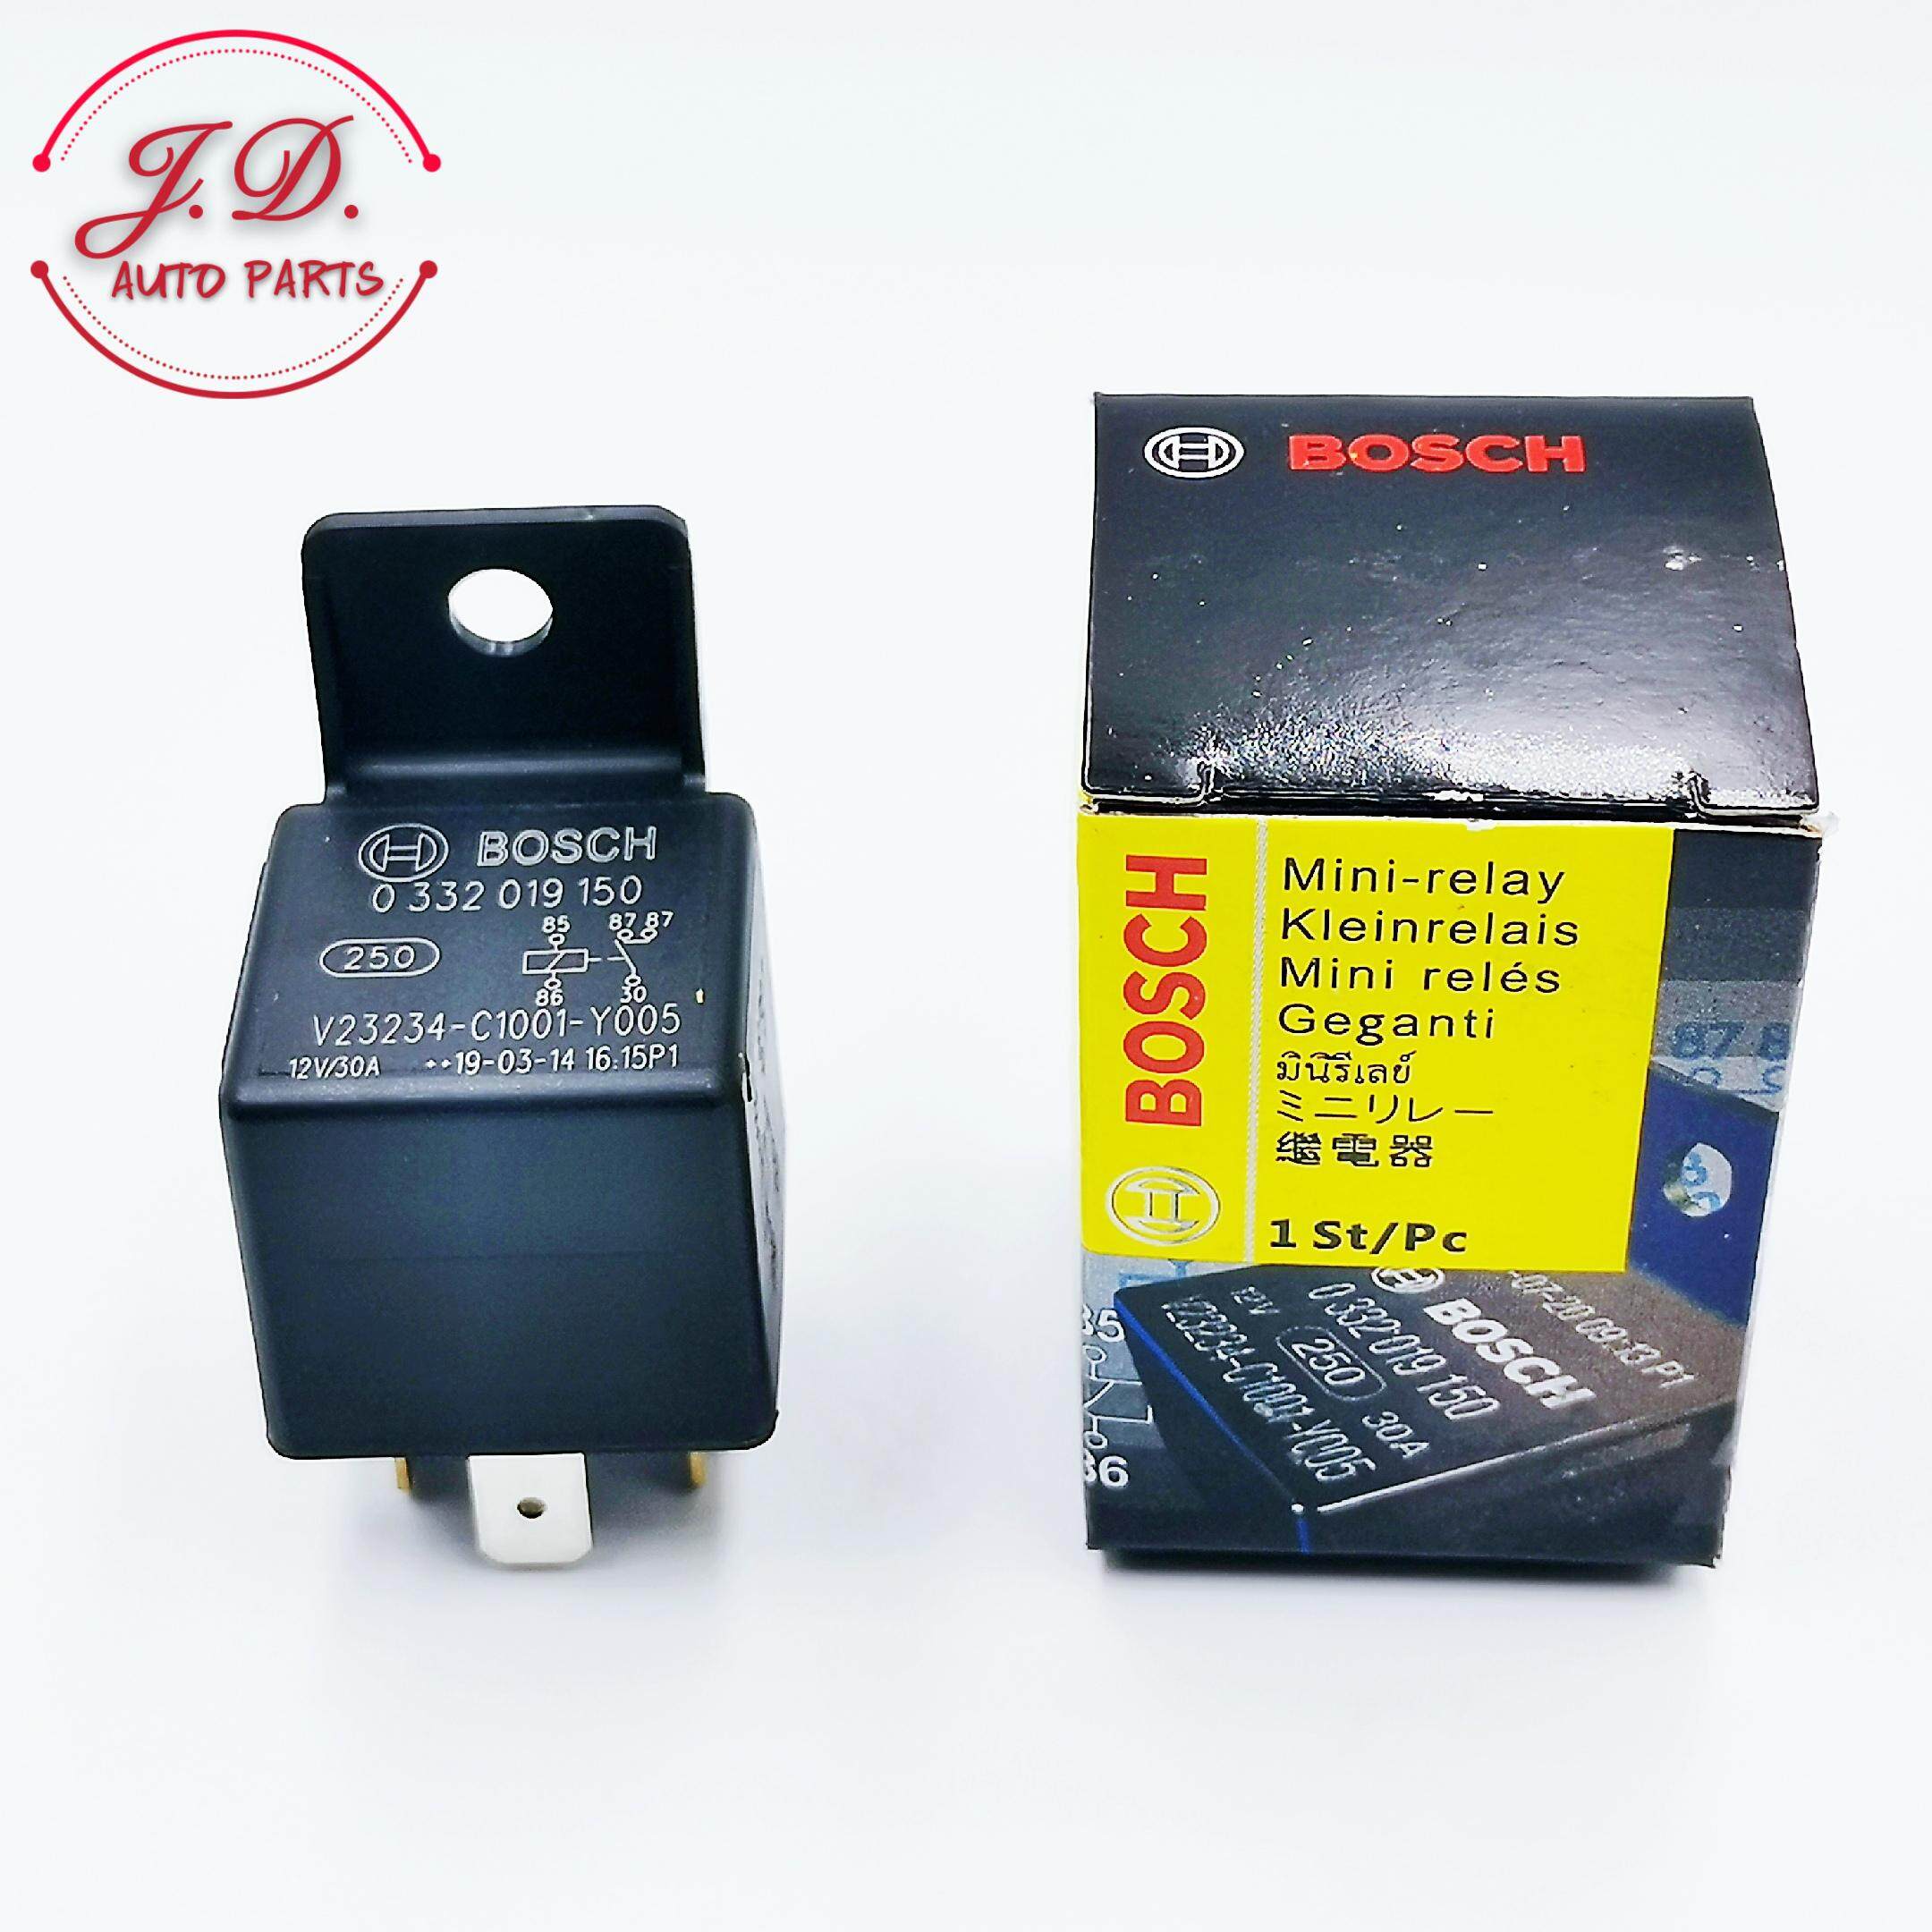 Bosch เเท้ รีเลย์ Relay 5 ขา 12V สำหรับรถยนต์ทุกรุ่น